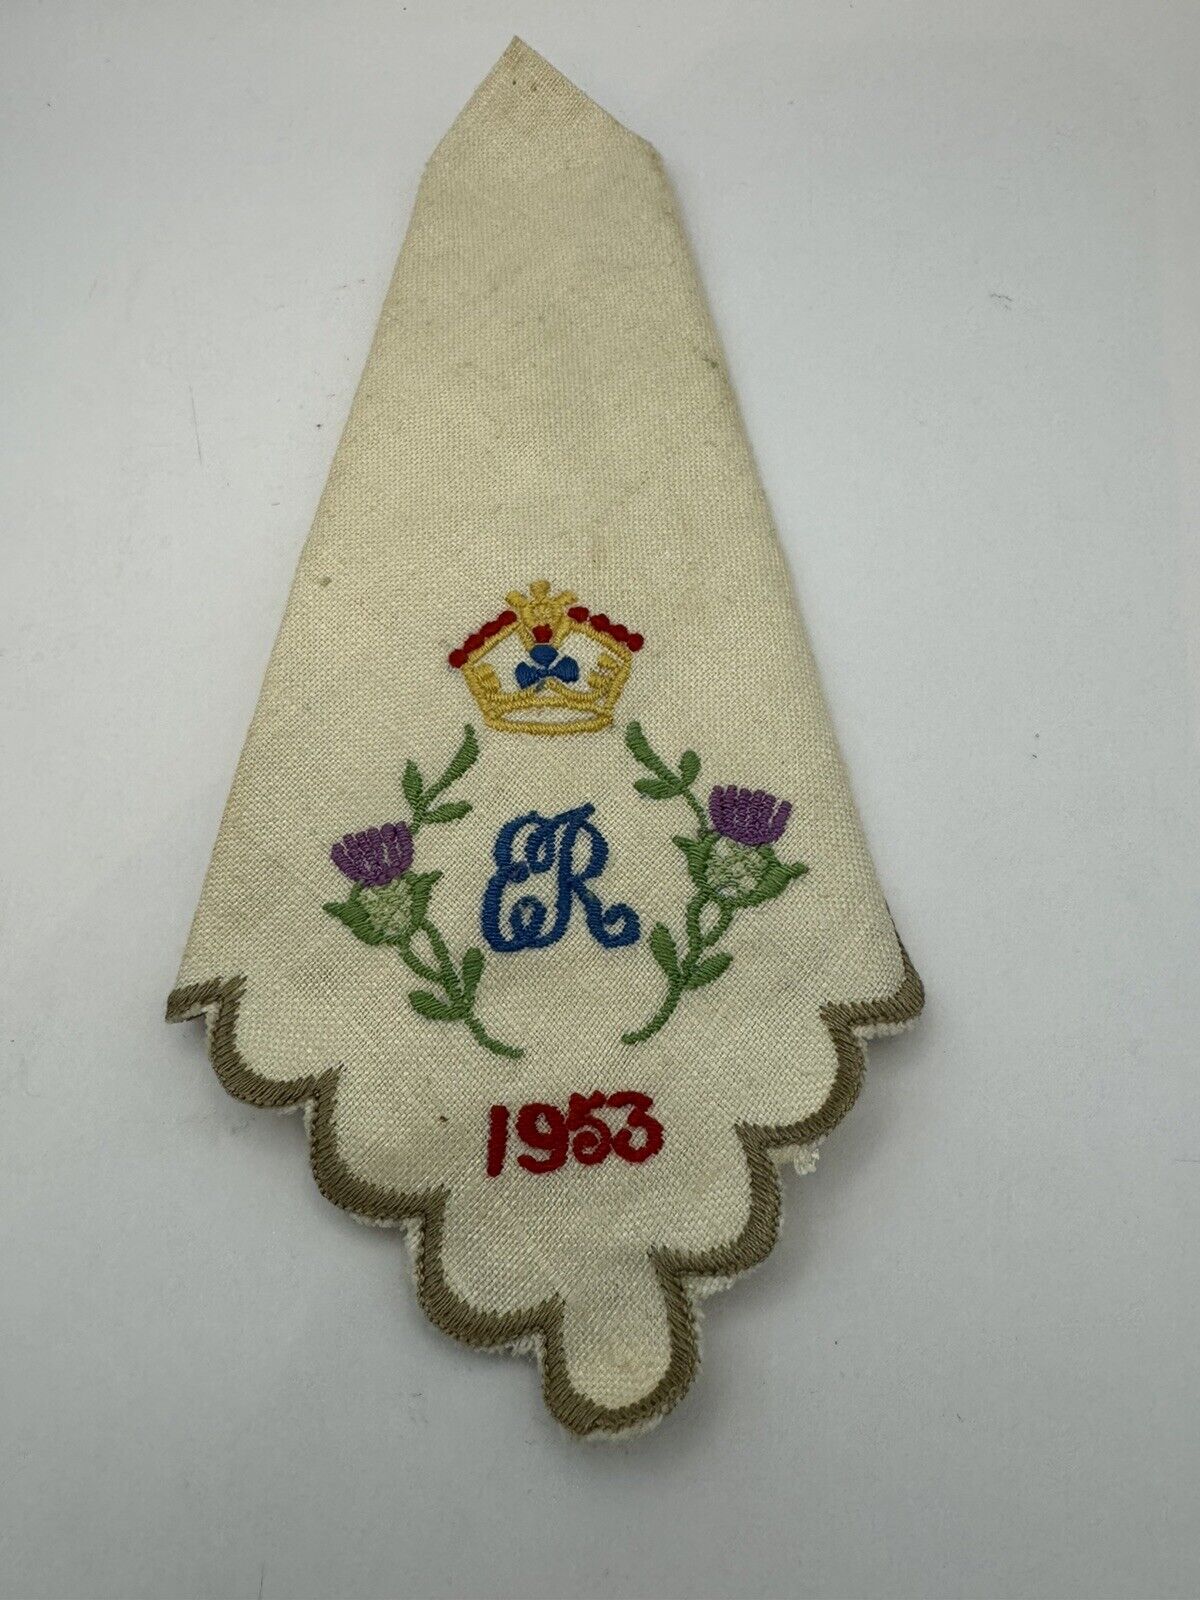 Queen Elizabeth II Coronation Linen Napkin Souvenir Keepsake Embroidered